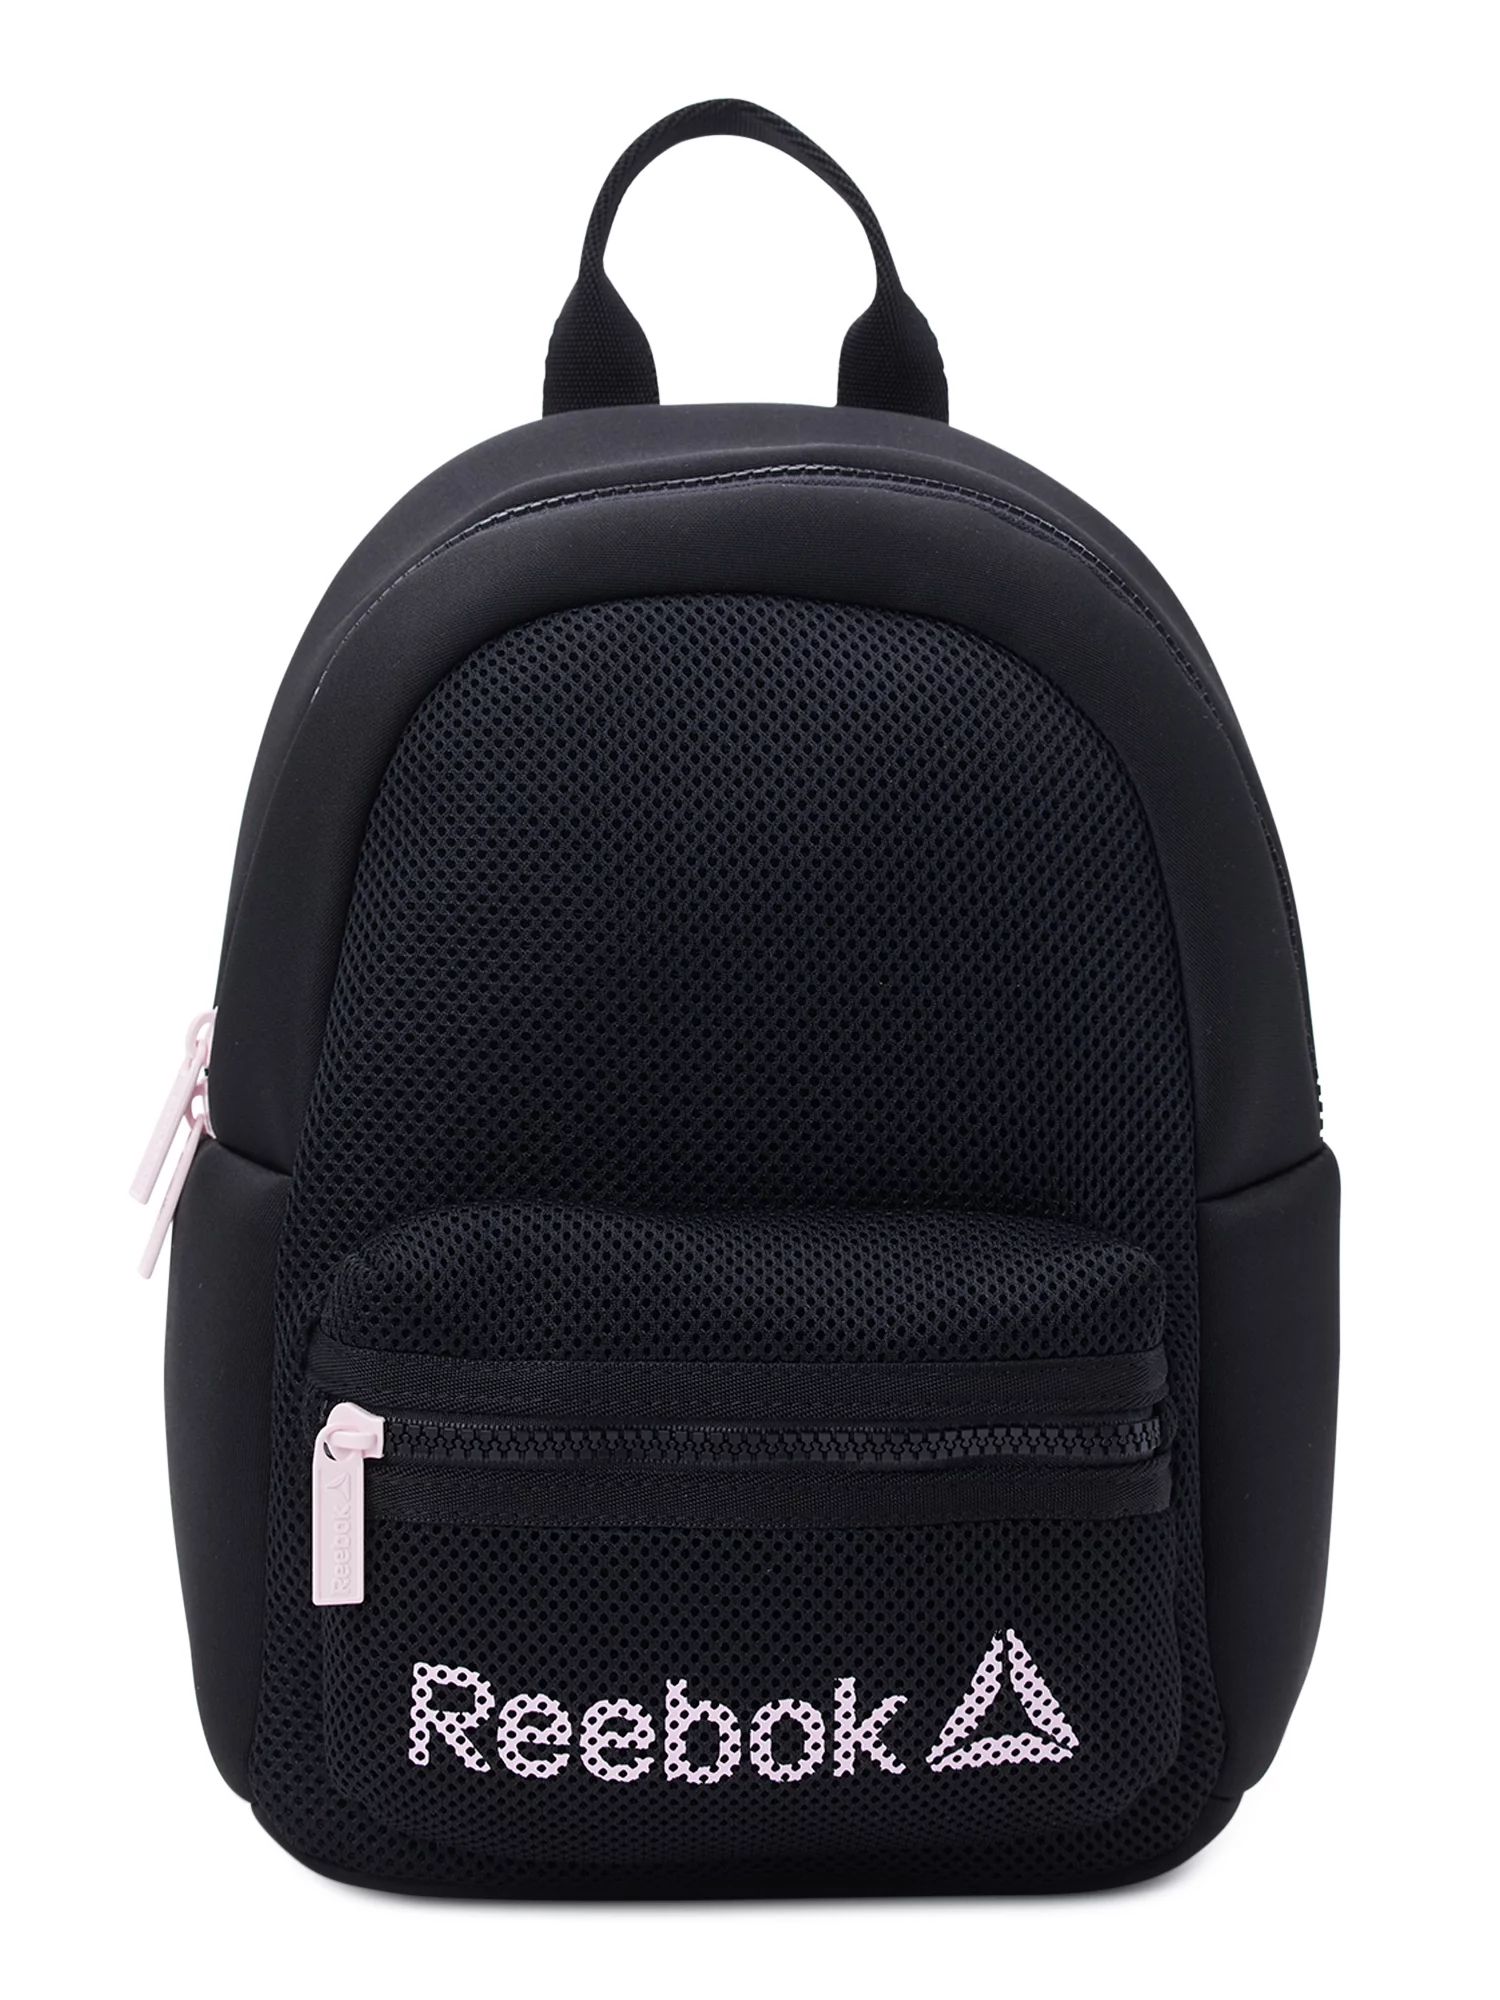 Reebok Women’s Evie Mini Backpack, Black | Walmart (US)